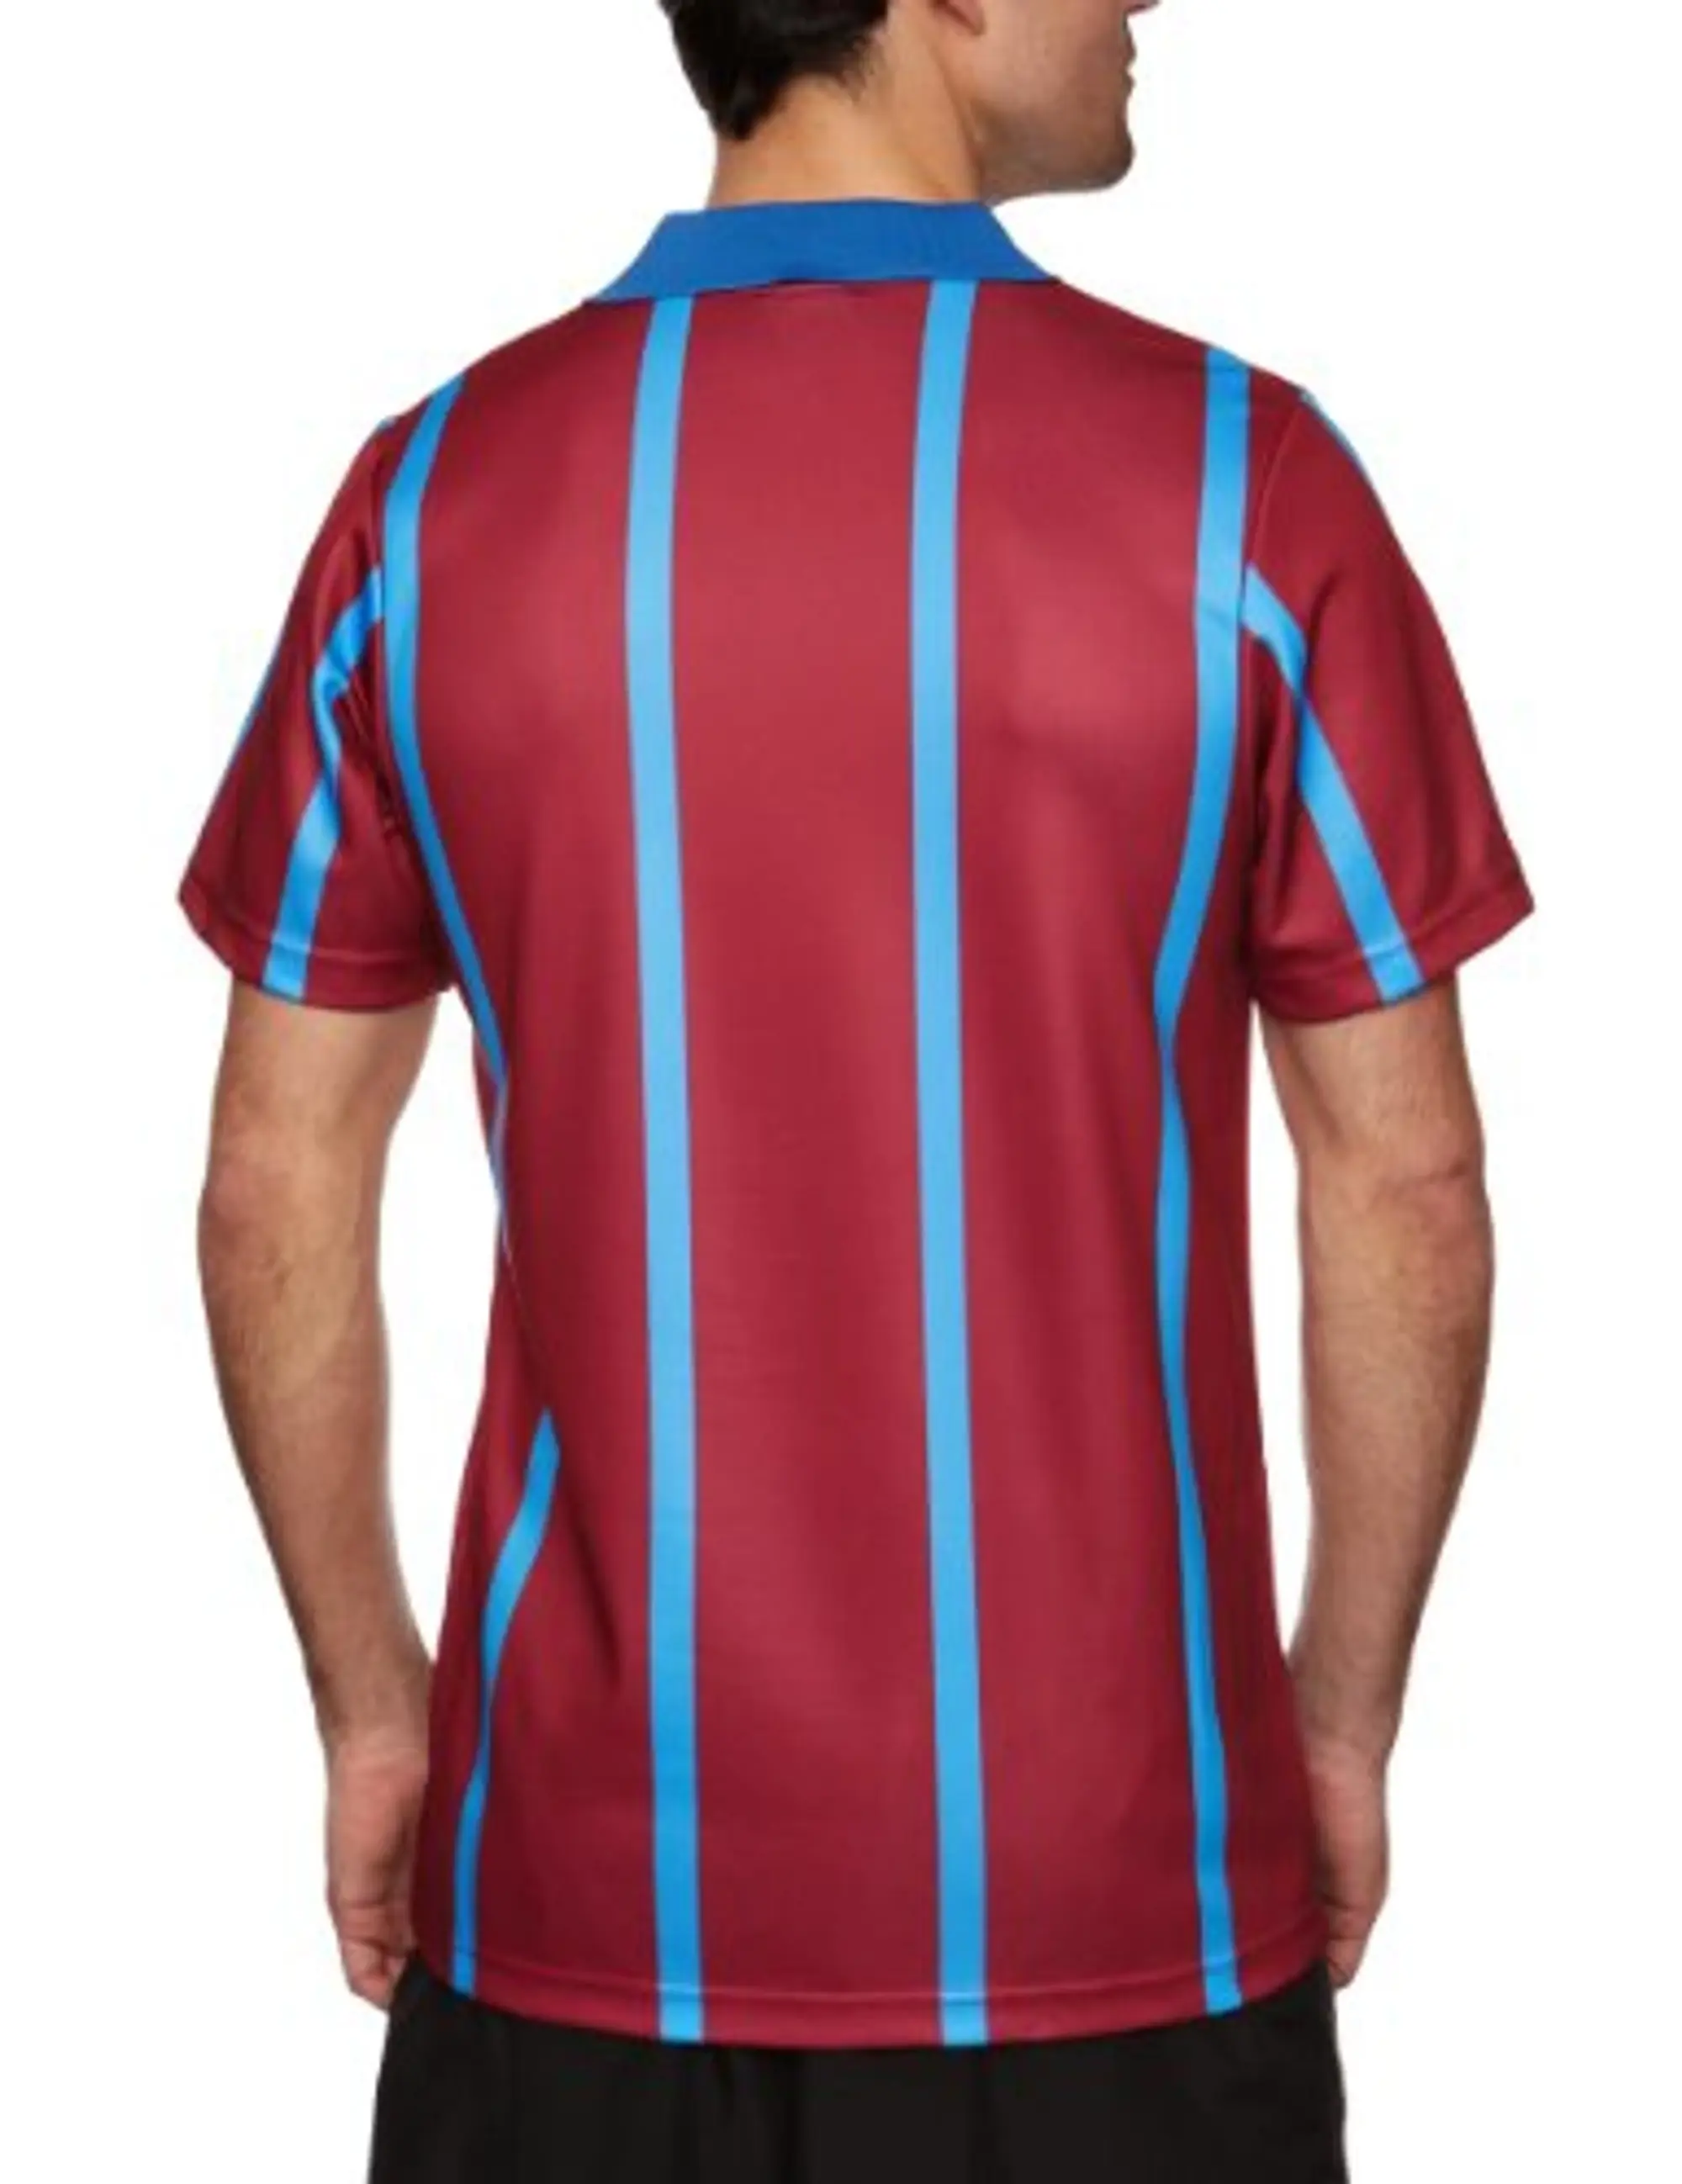 Score Draw Aston Villa Mens SS Home Shirt 1994/95